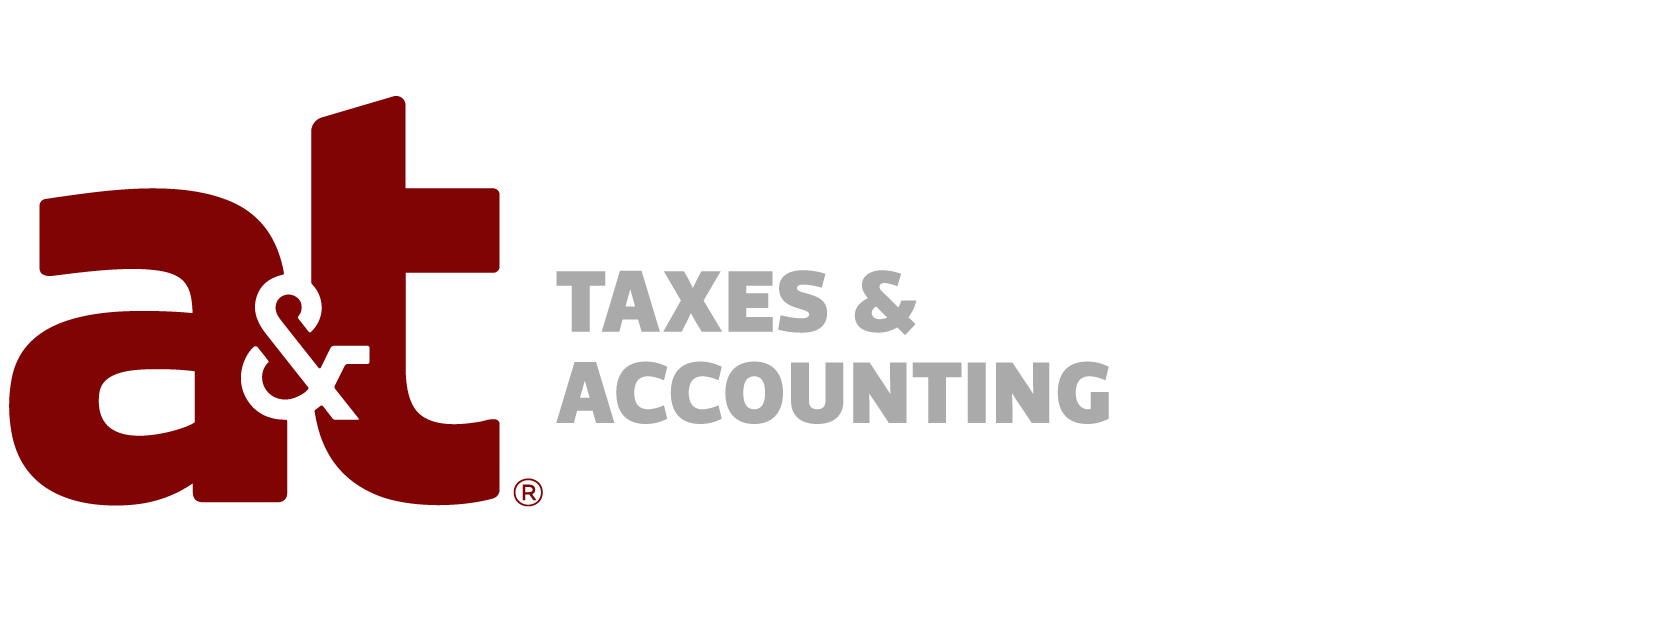 logo taxes & accounting